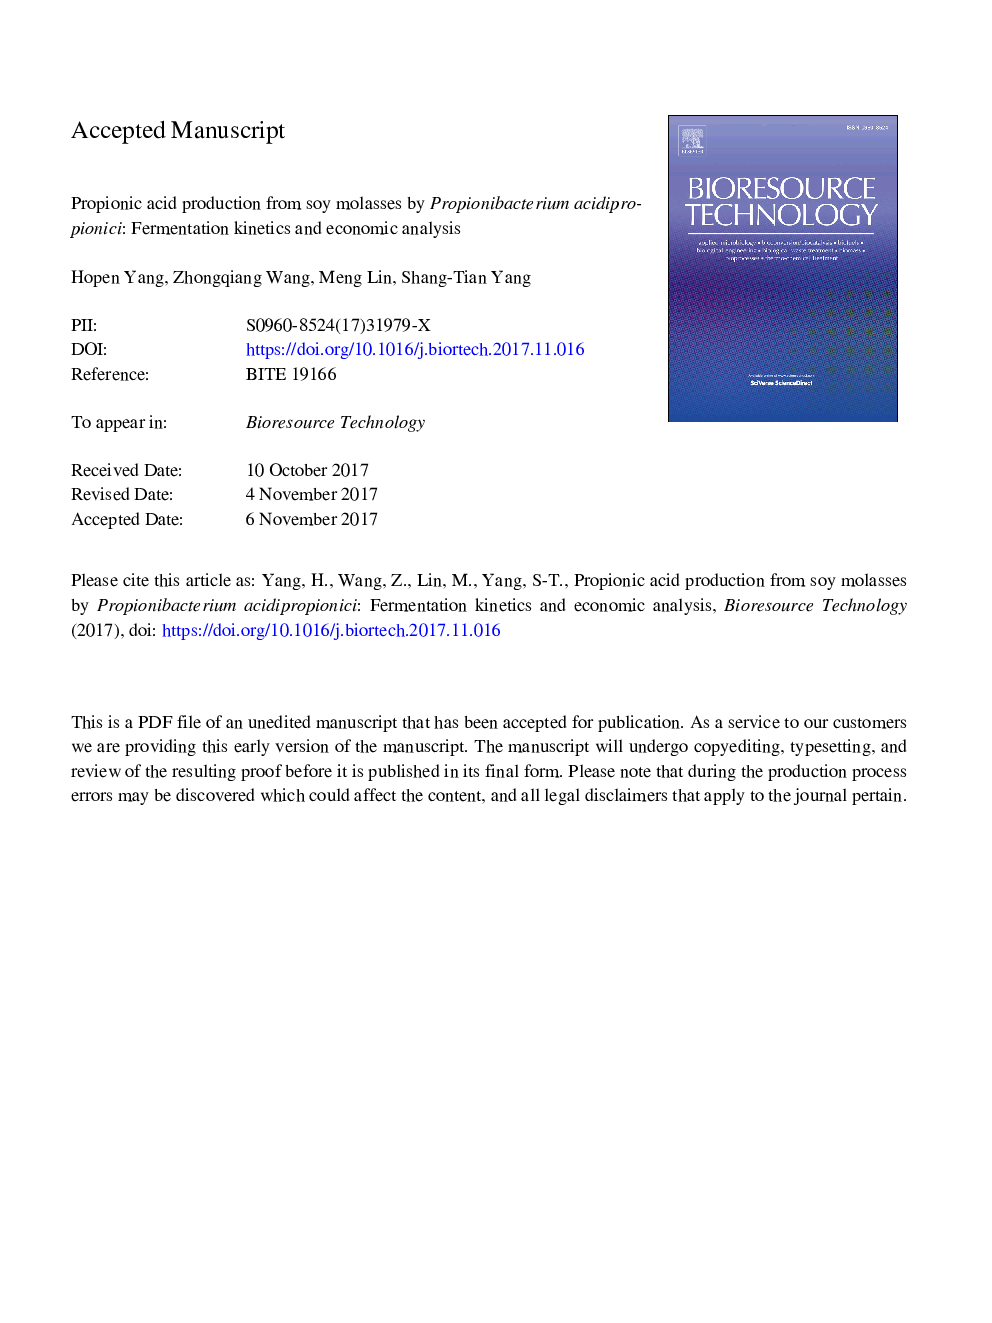 Propionic acid production from soy molasses by Propionibacterium acidipropionici: Fermentation kinetics and economic analysis